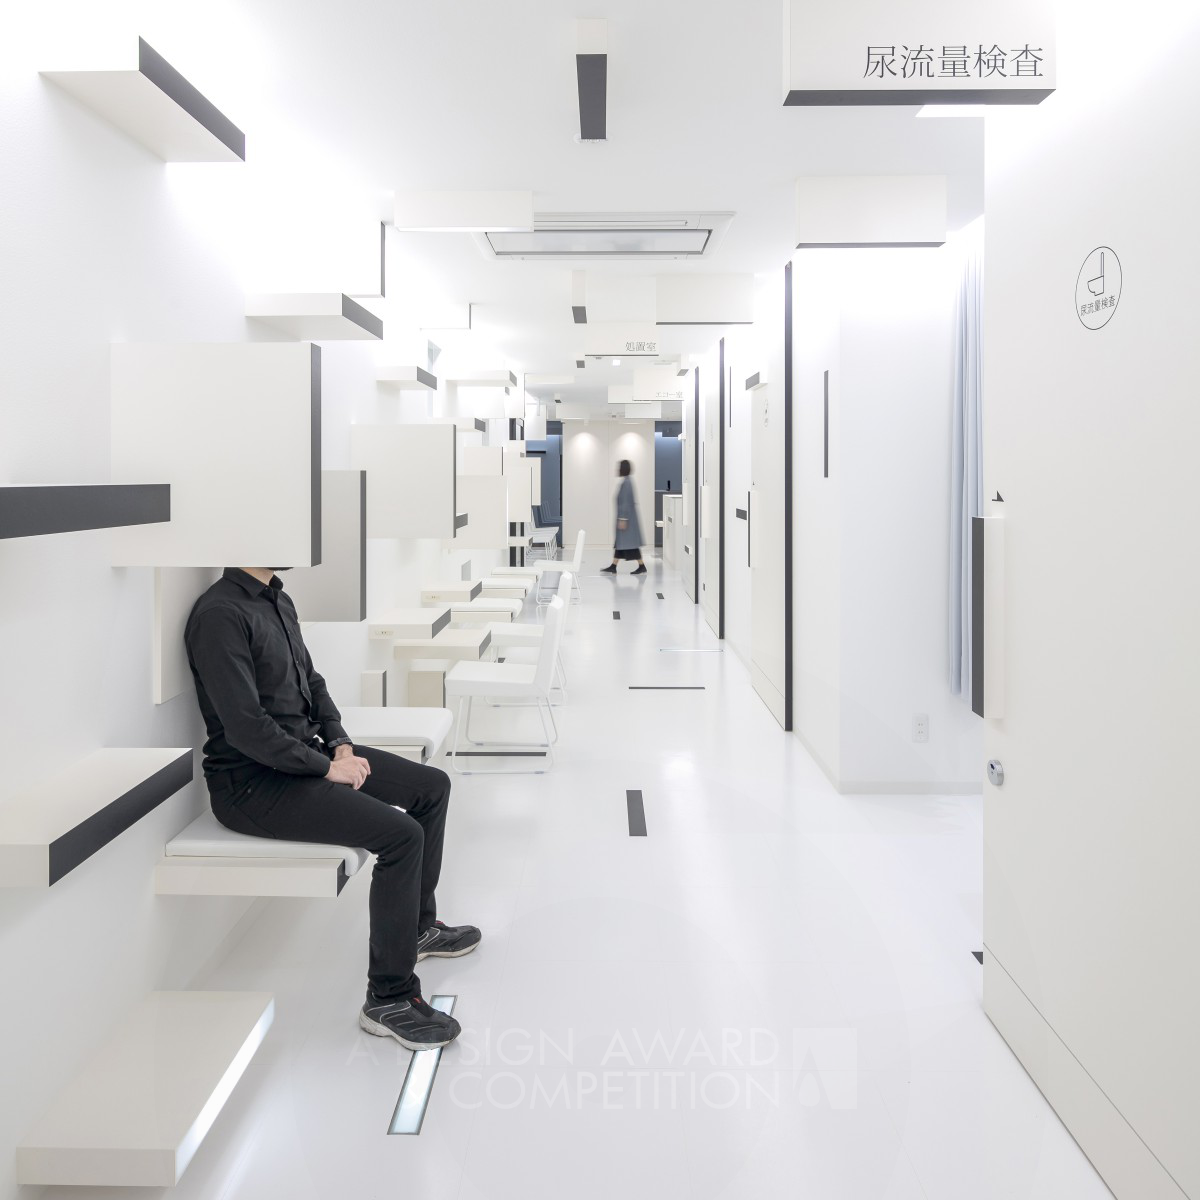 Tetsuya Matsumoto Urology Clinic